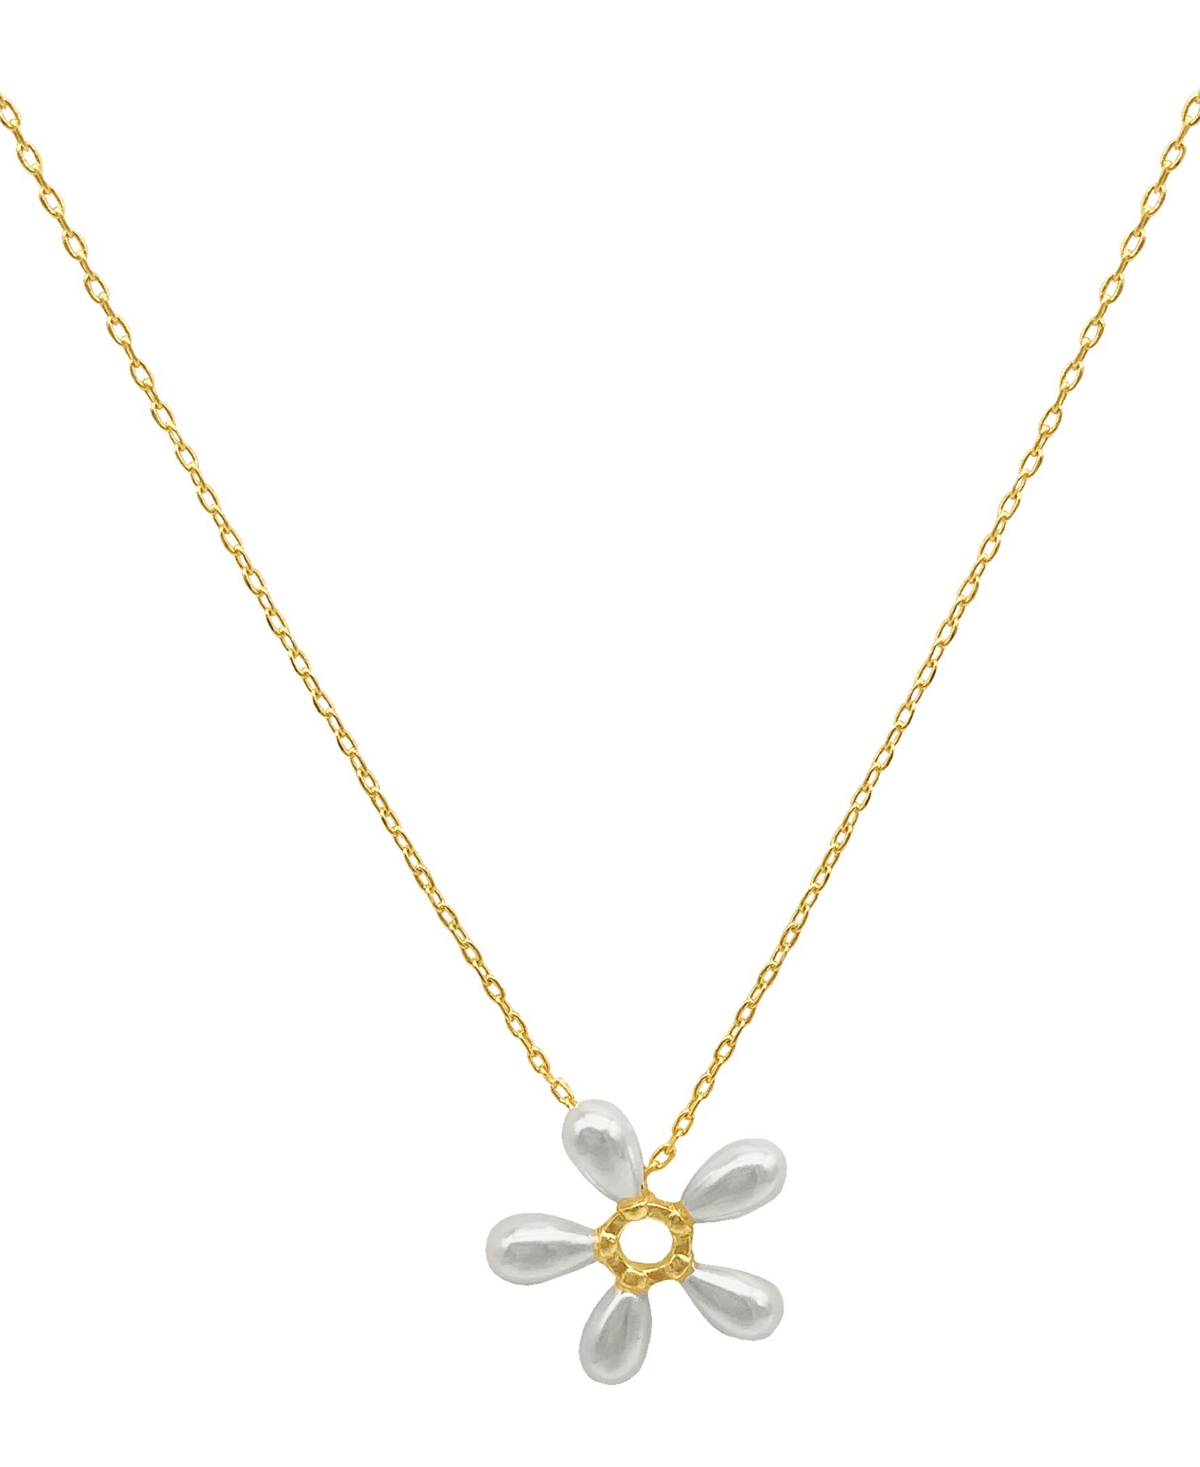 Floral Imitation Pearl Pendant Necklace - White